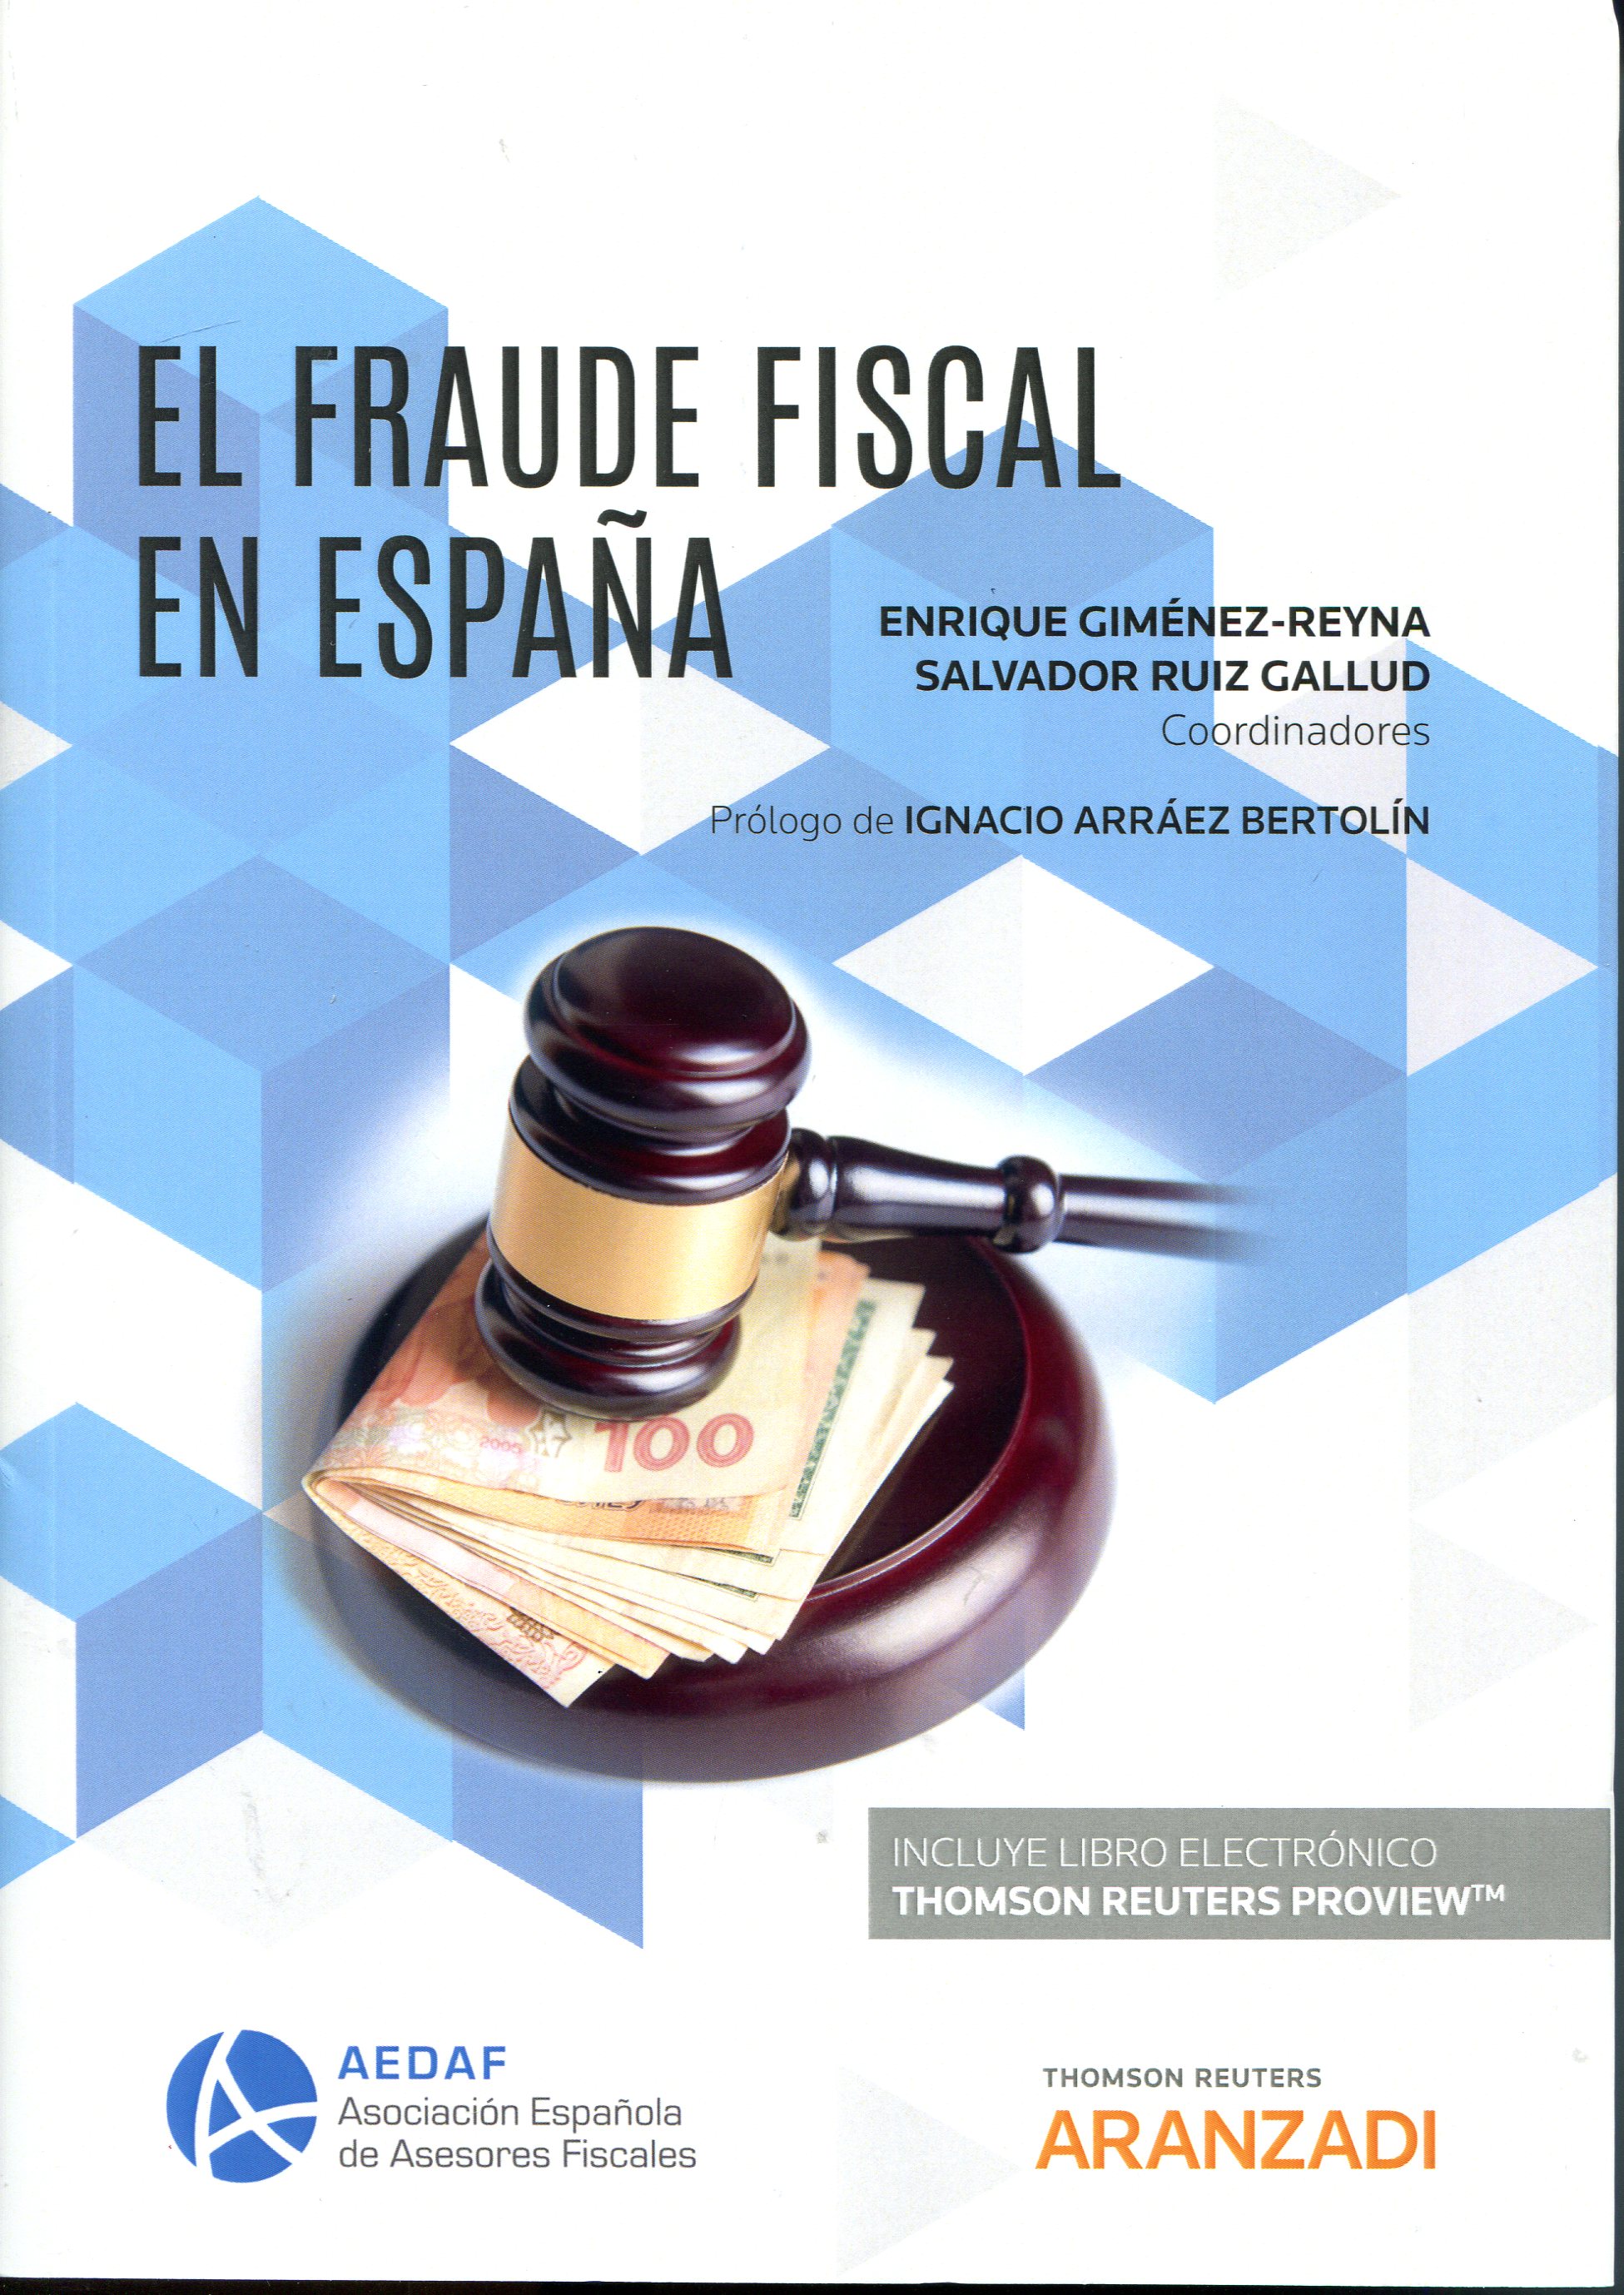 El fraude fiscal en España